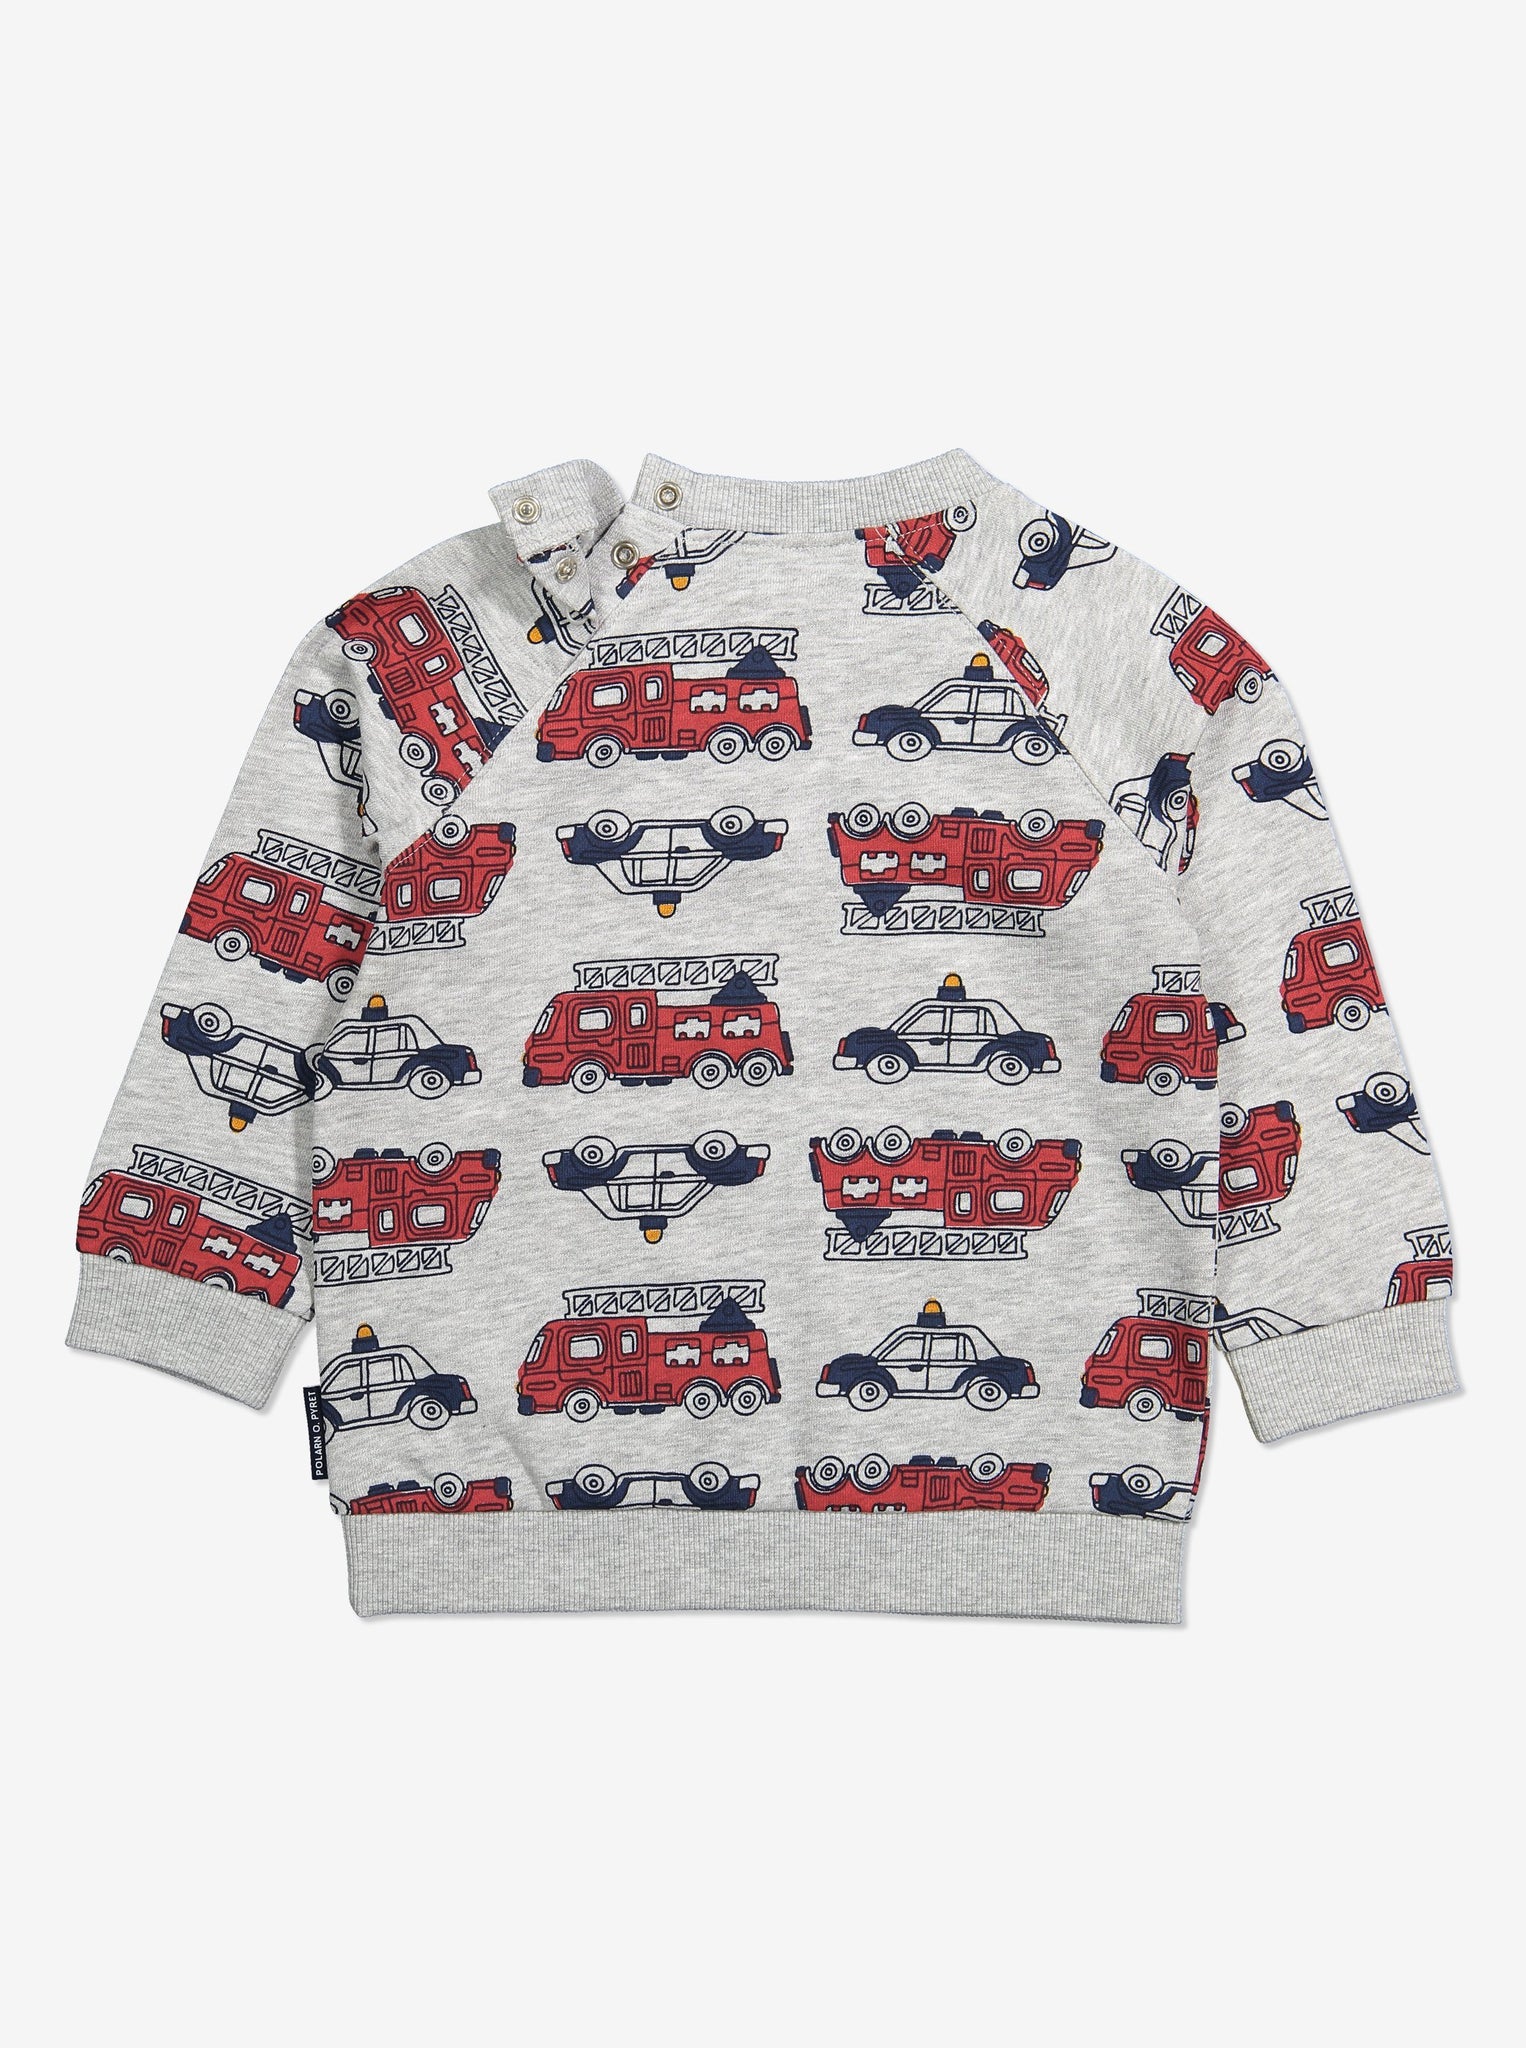 Vehicle Print Kids Sweatshirt-Unisex-1-6y-Grey